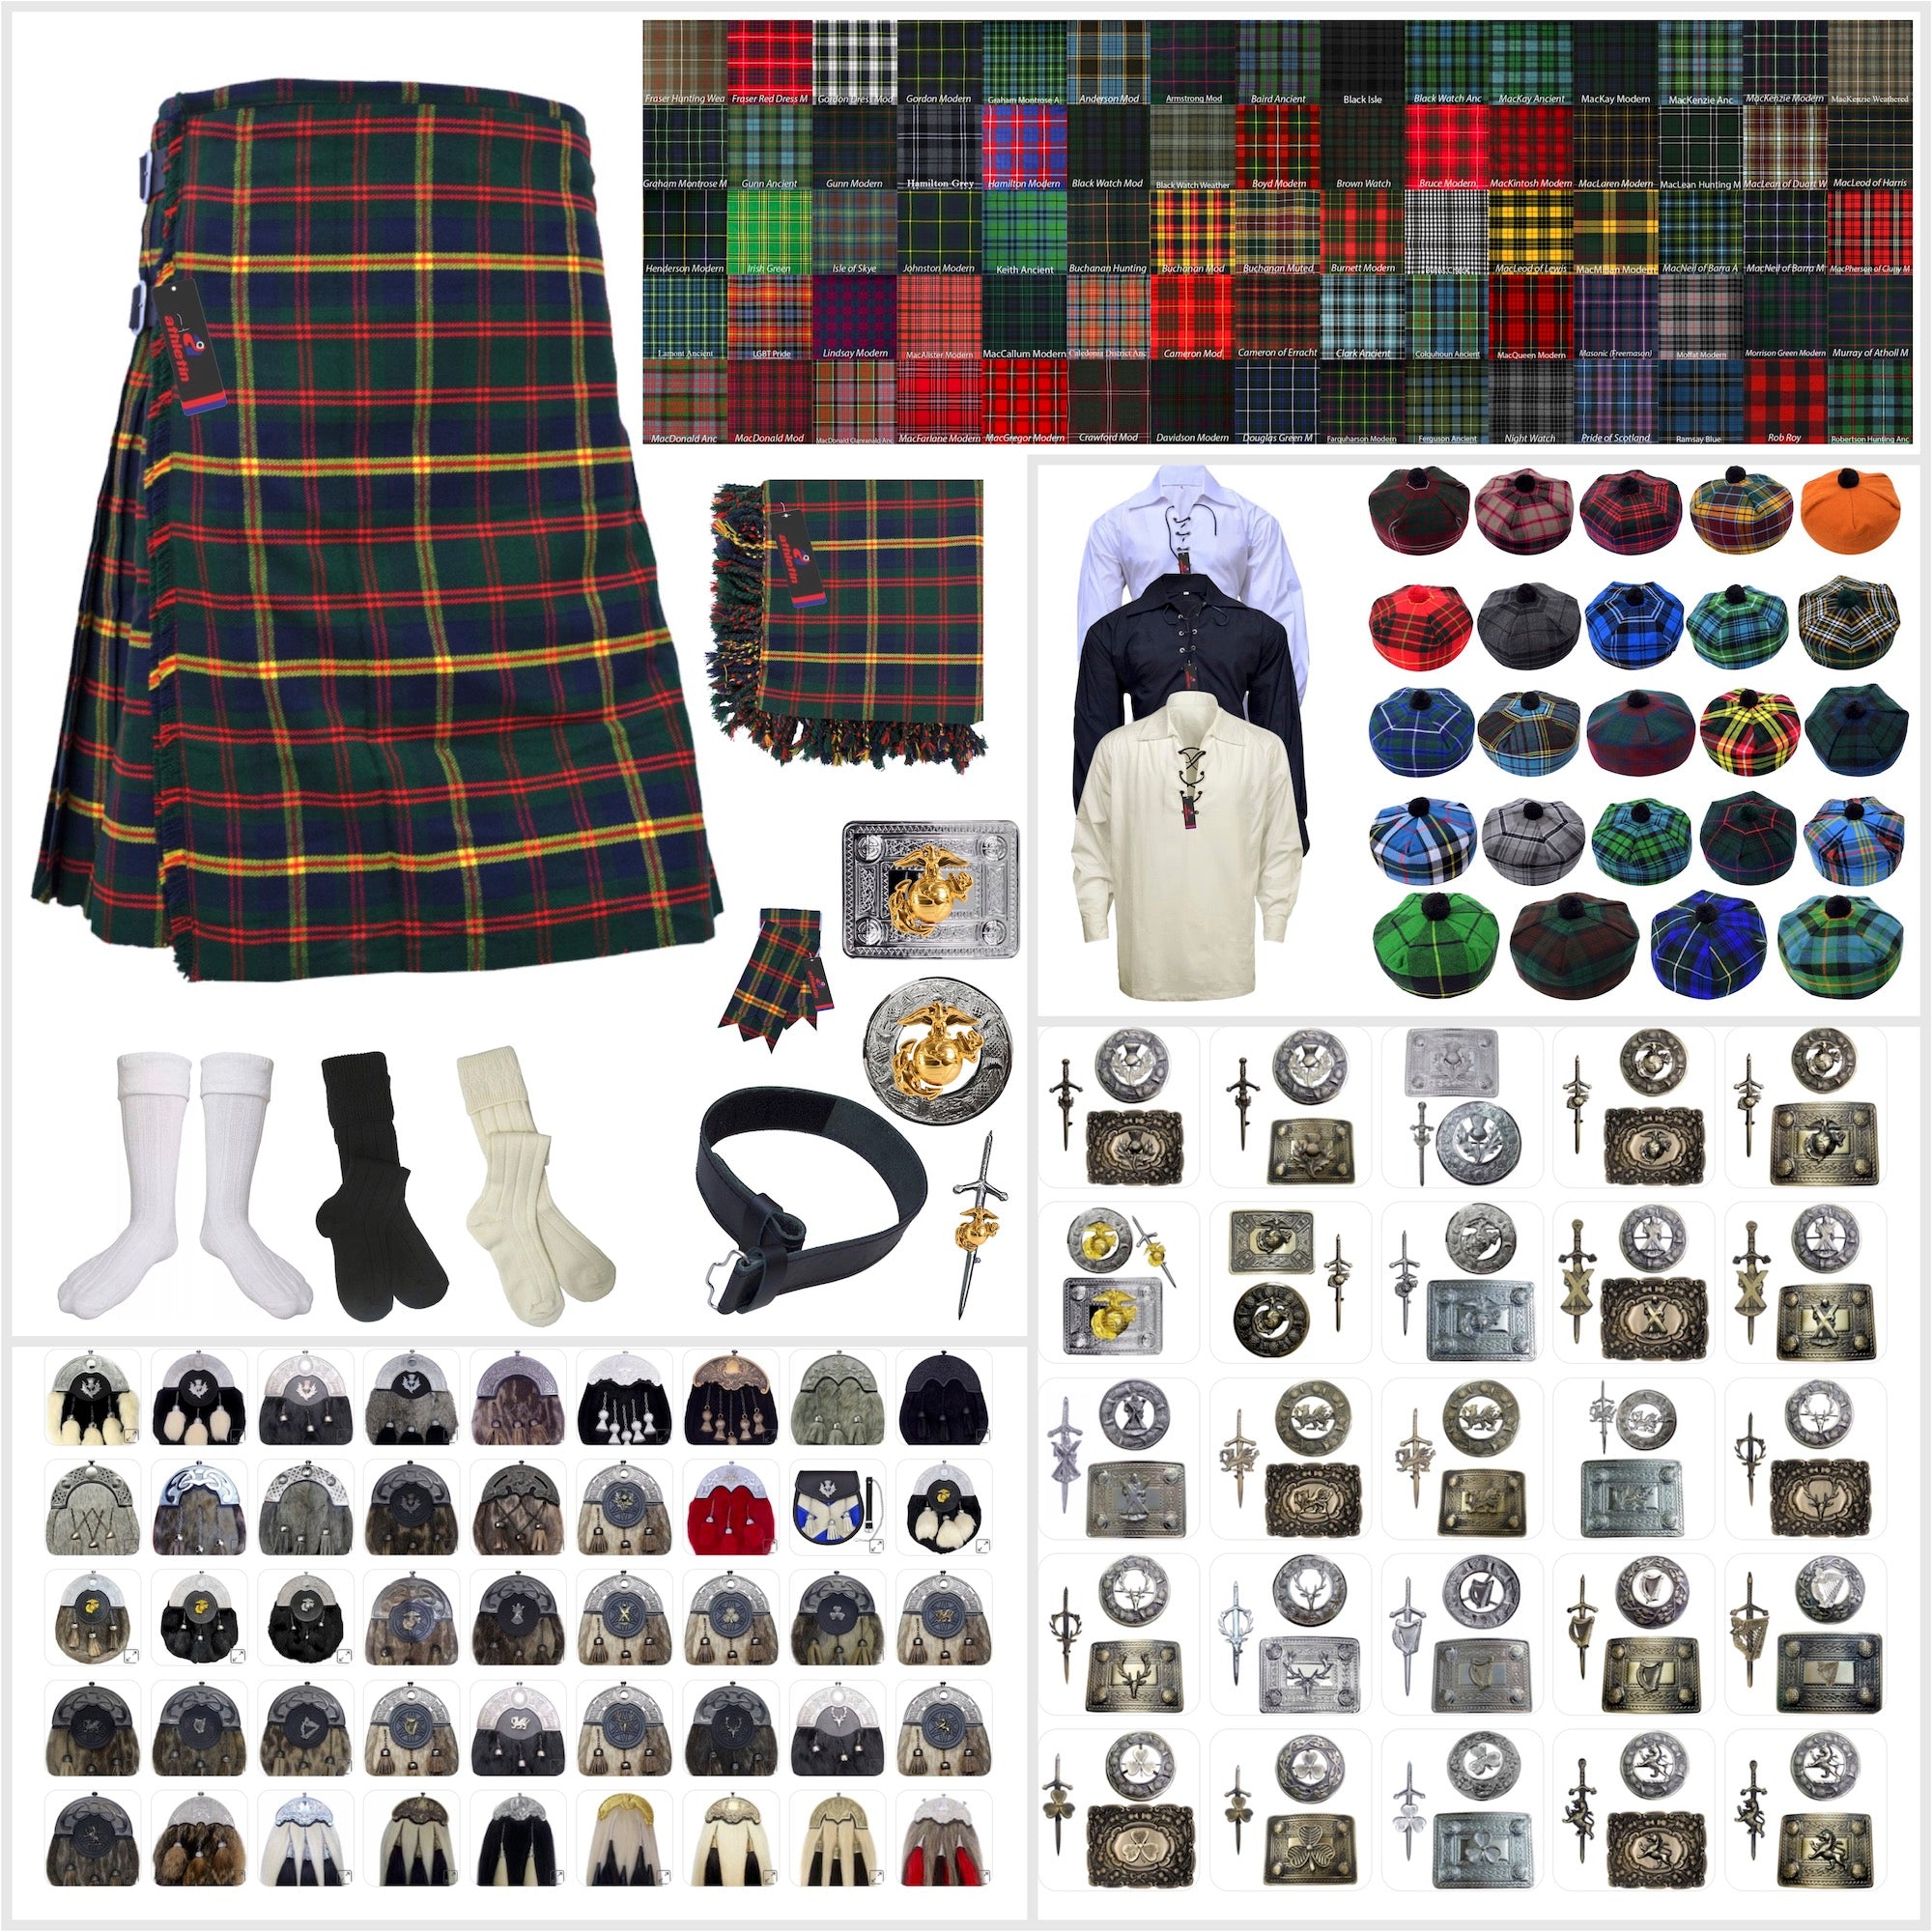 Leatherneck Tartan Kilt Outfit